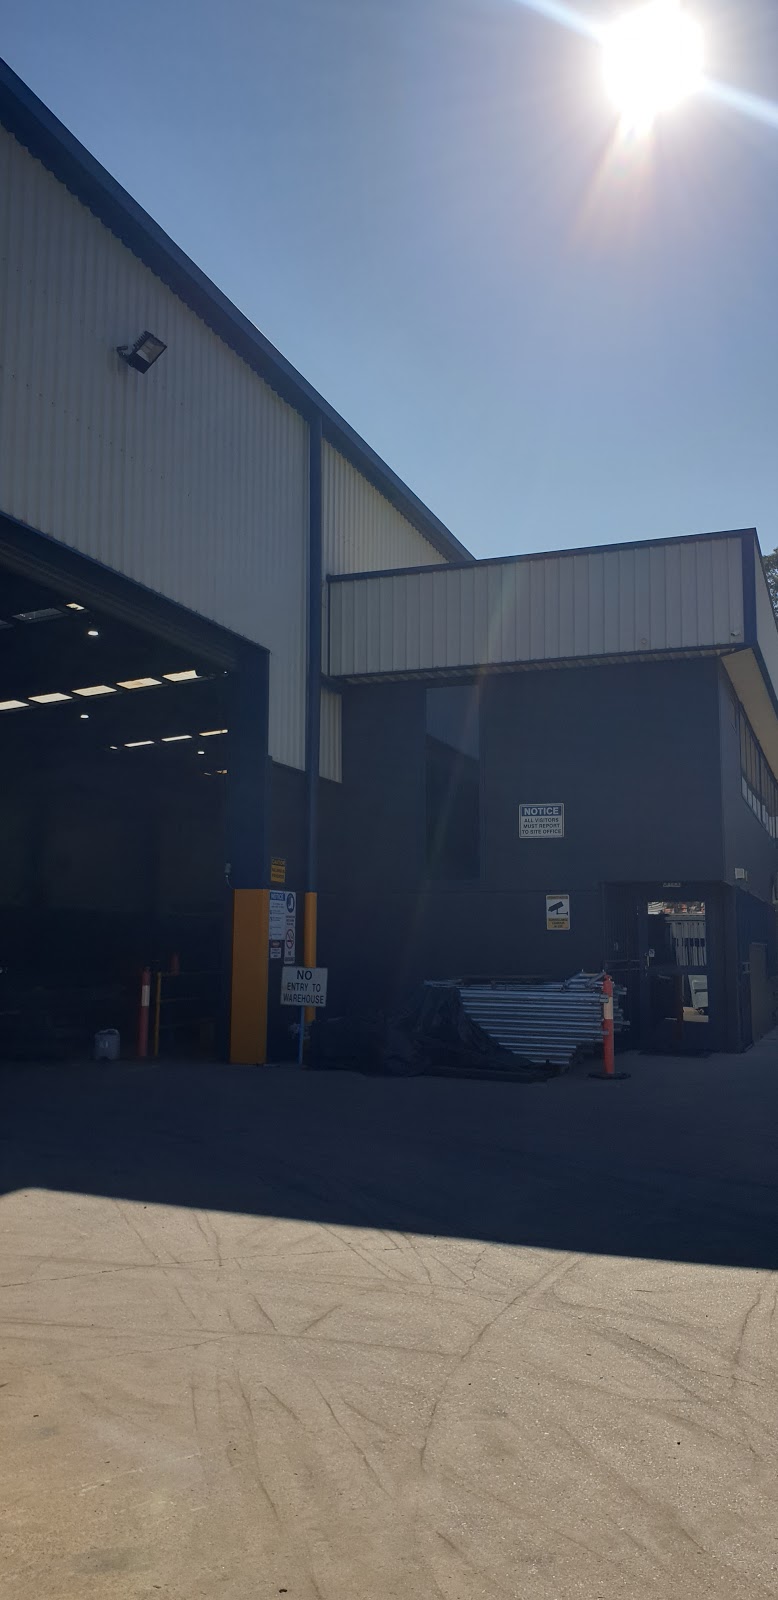 Fabinox Steel & Pipe |  | 67 Melbourne Rd, Riverstone NSW 2765, Australia | 0296276237 OR +61 2 9627 6237